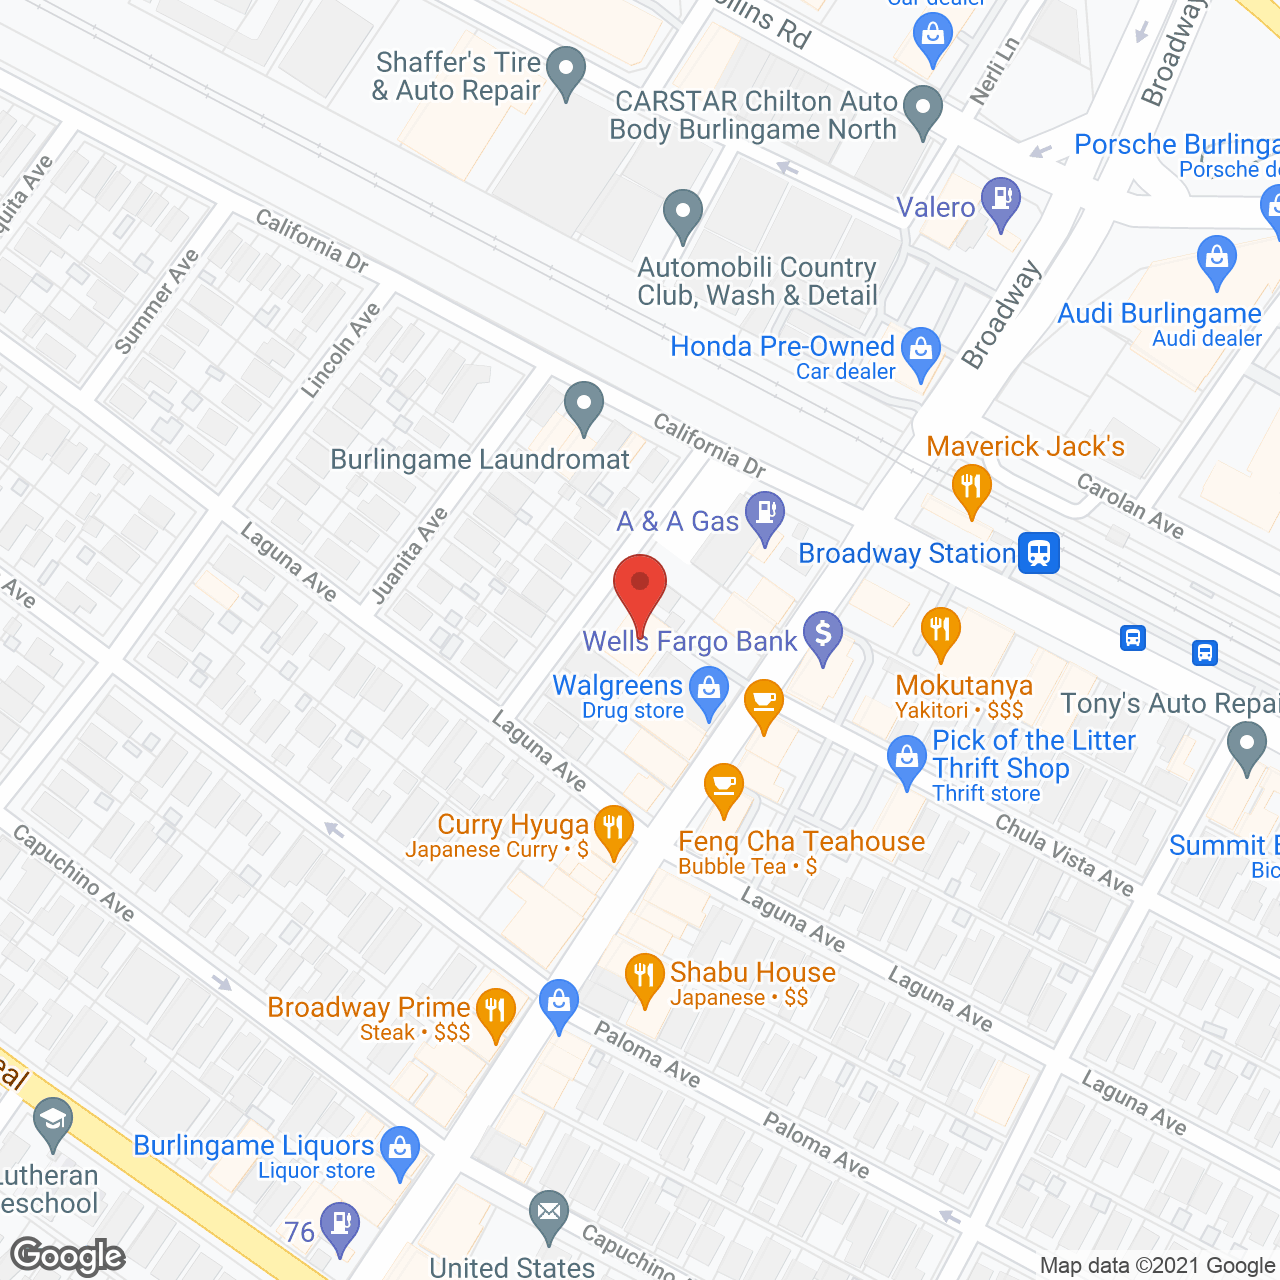 Burlingame Villa Inc in google map